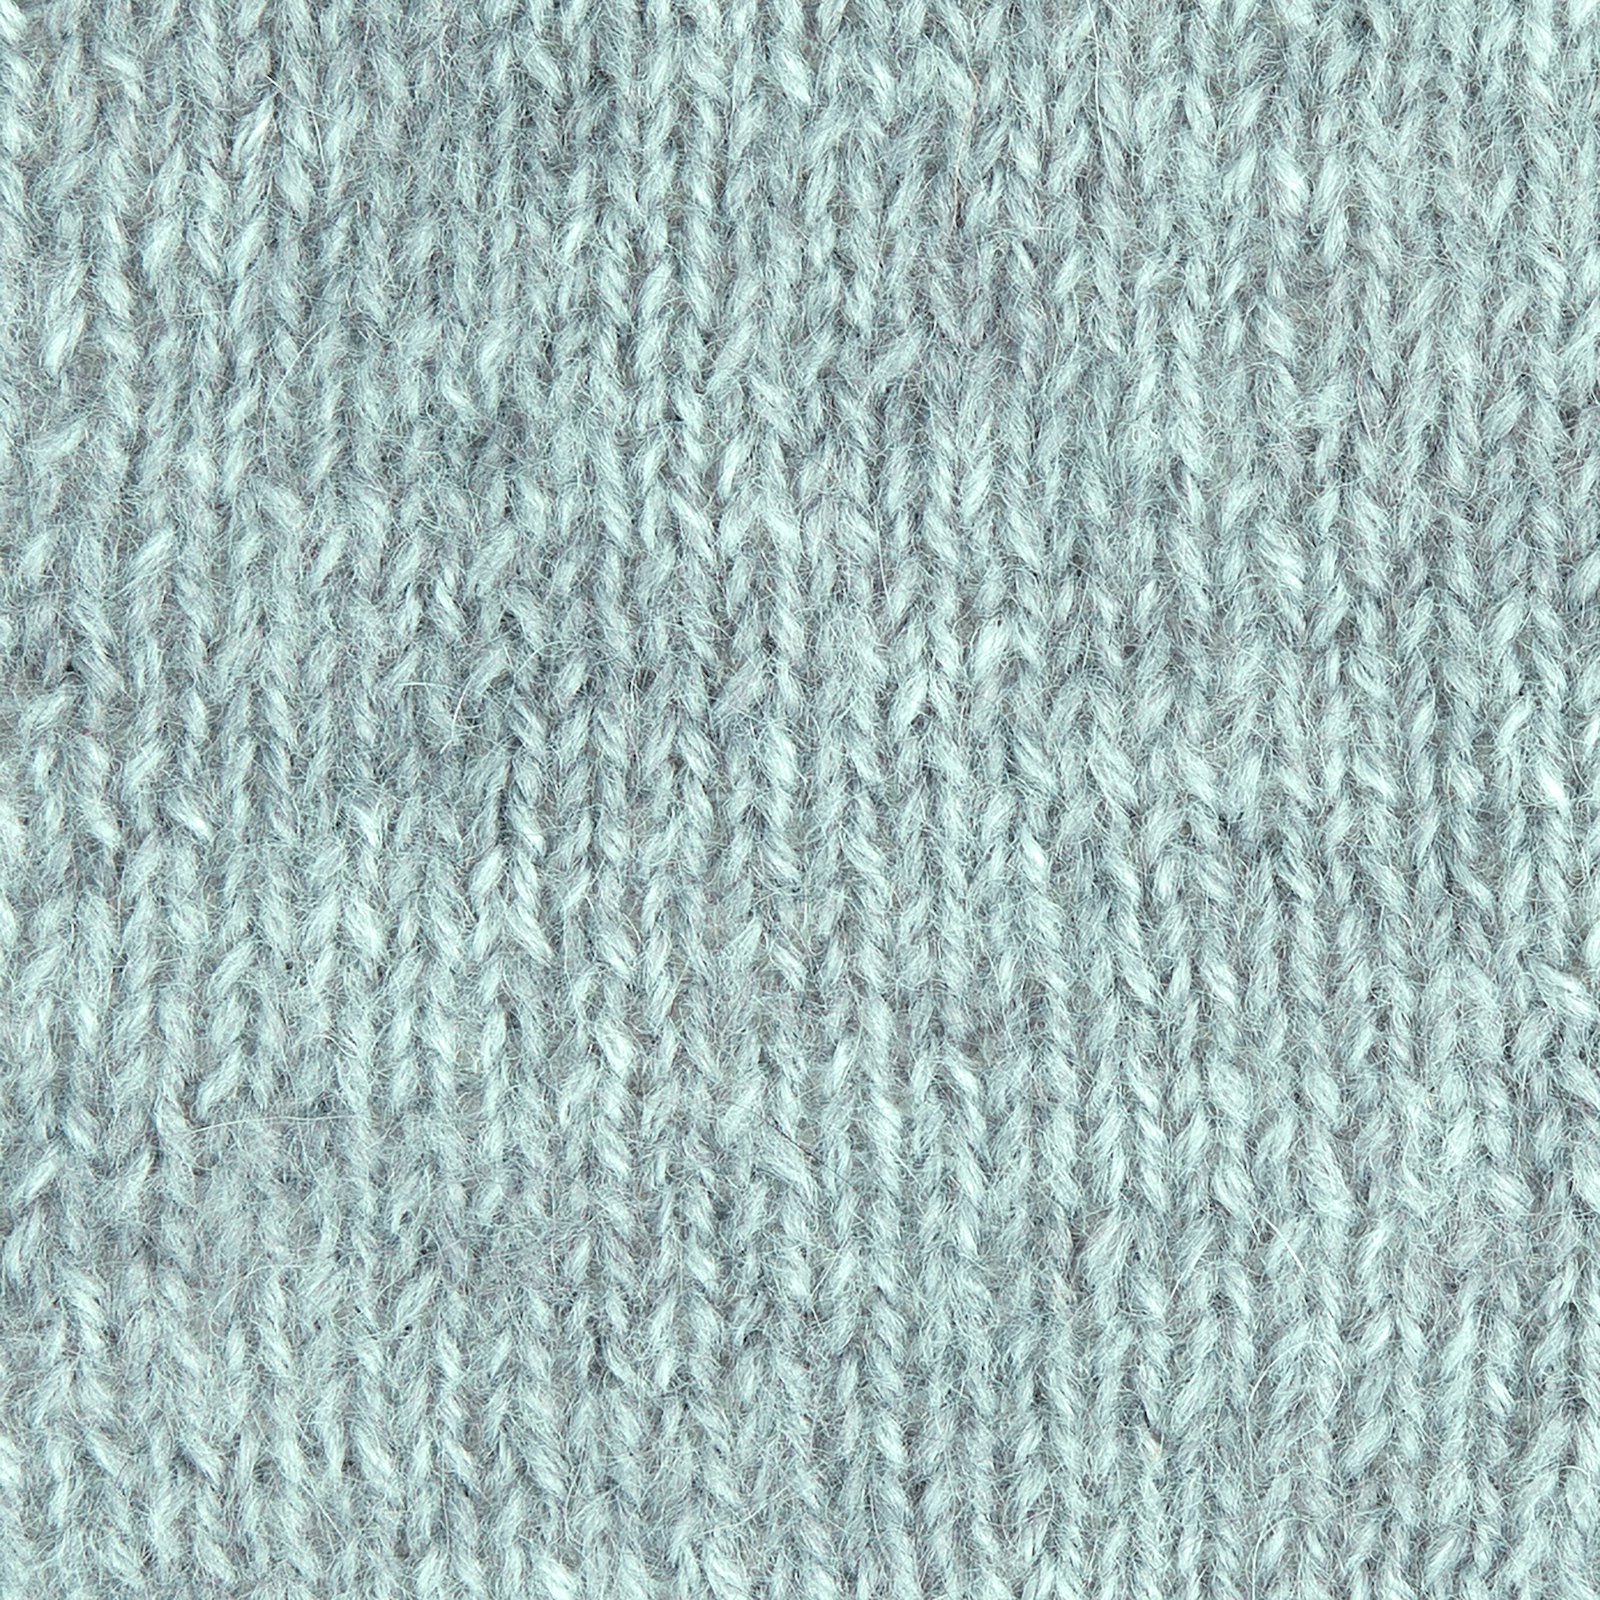 FRAYA, kid mohair mixed yarn "Fluffy", antique blue 90066334_sskit